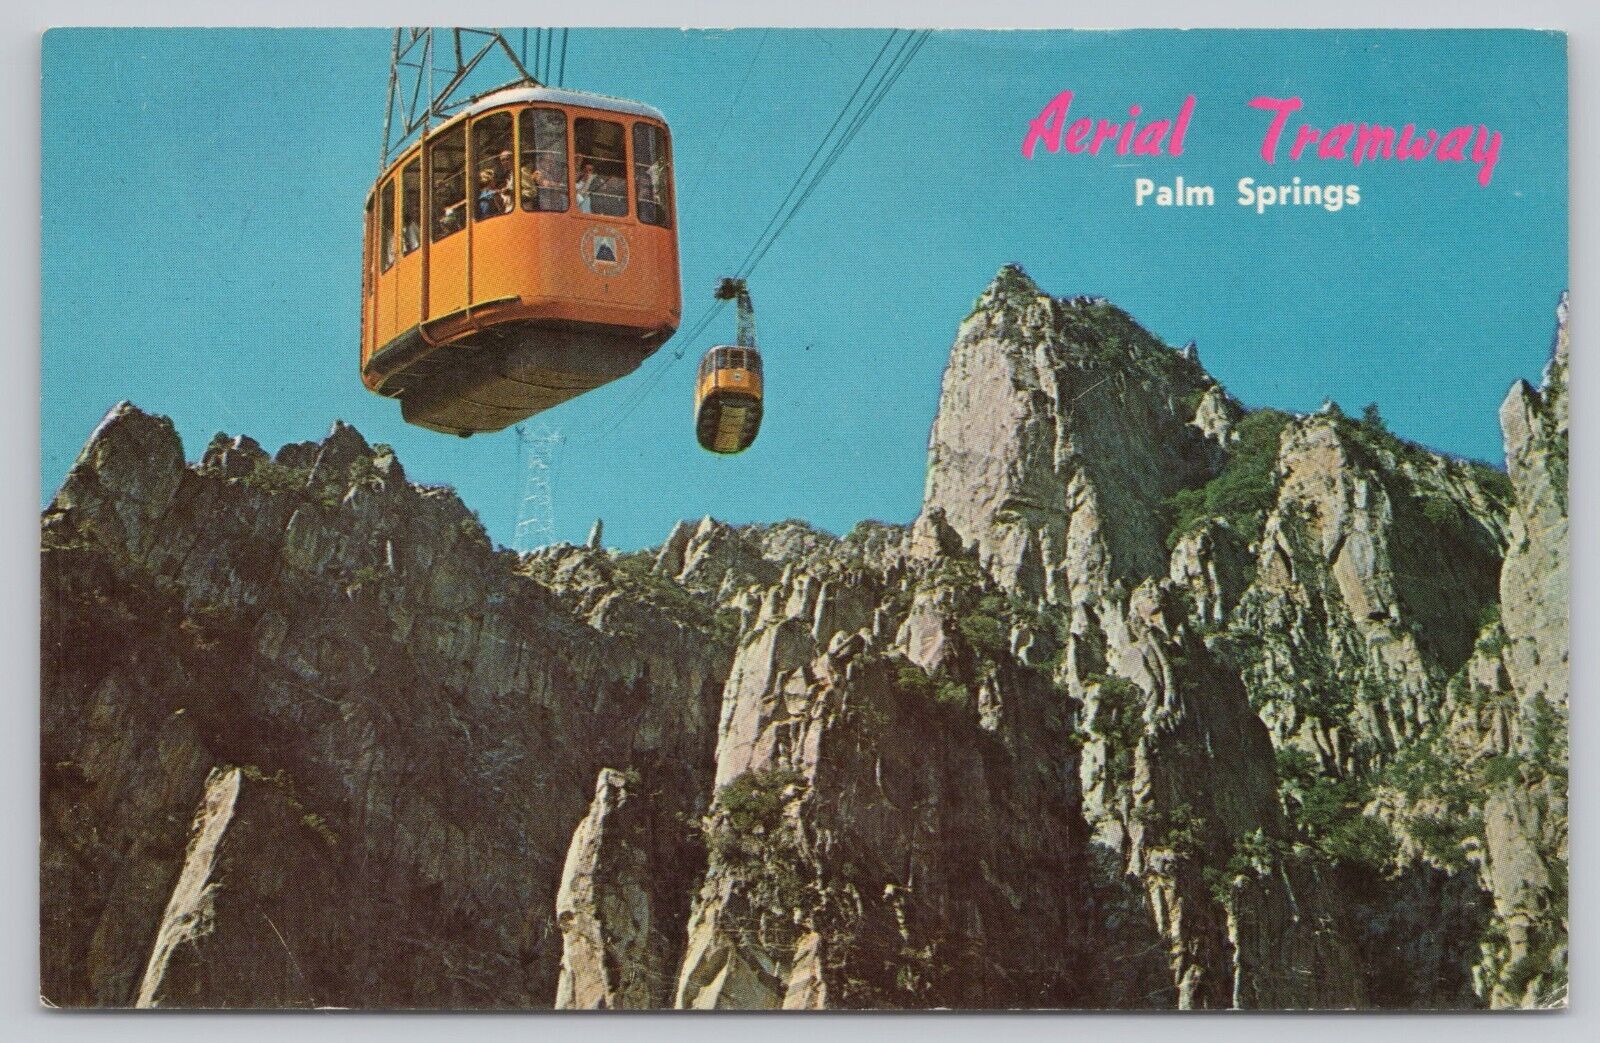 Palm Springs California, Aerial Tramway, Vintage Postcard